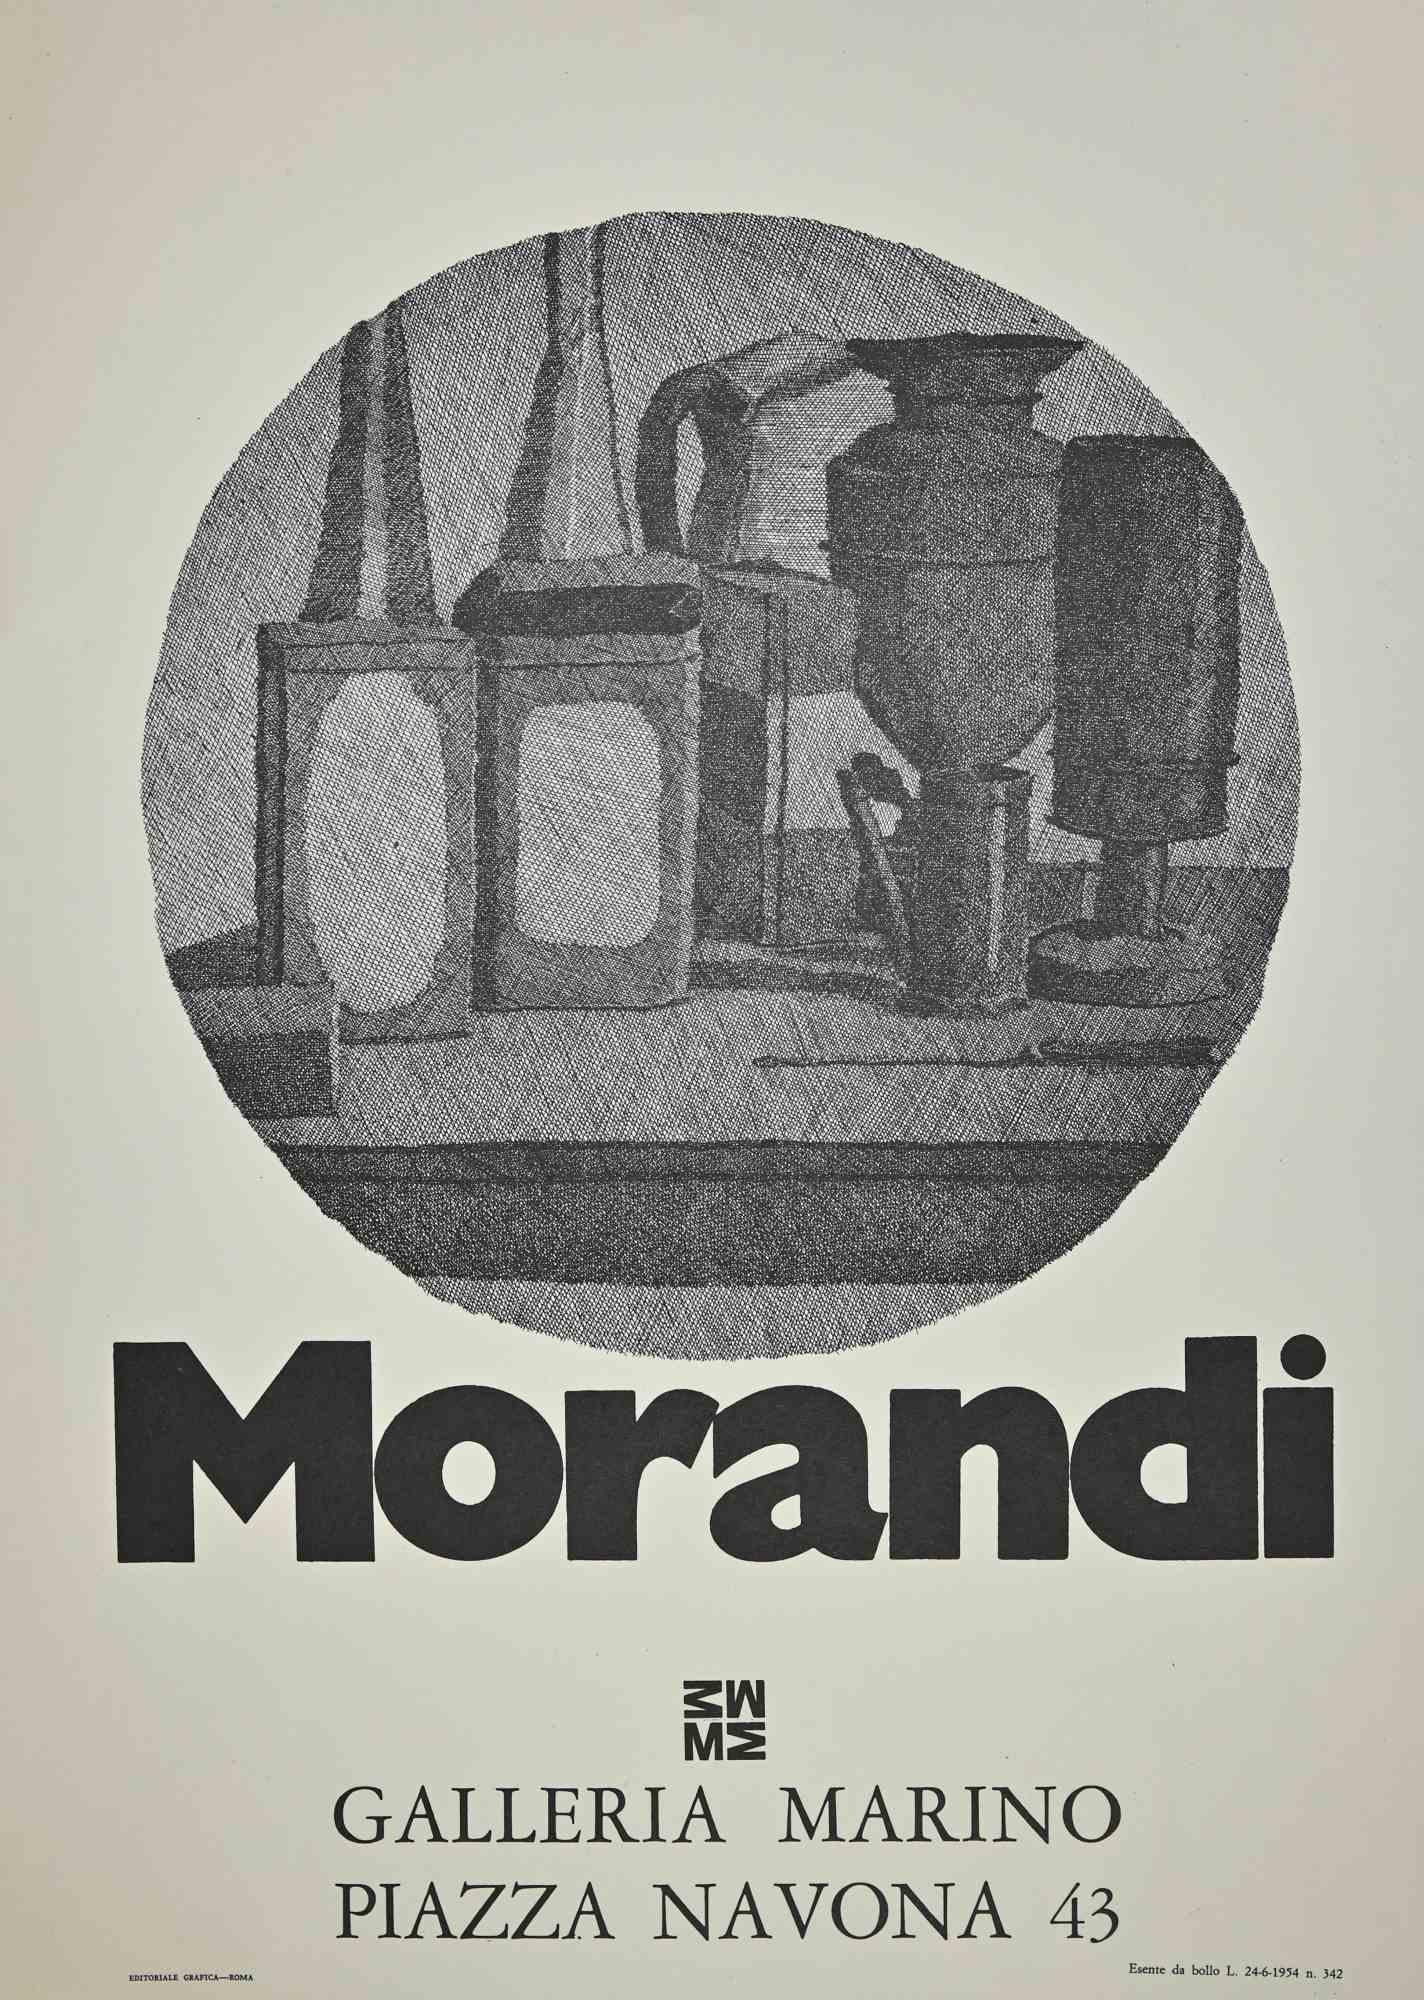 Still-Life Print Giorgio Morandi - Affiche d'exposition vintage Morandi - Impression offset - 1970